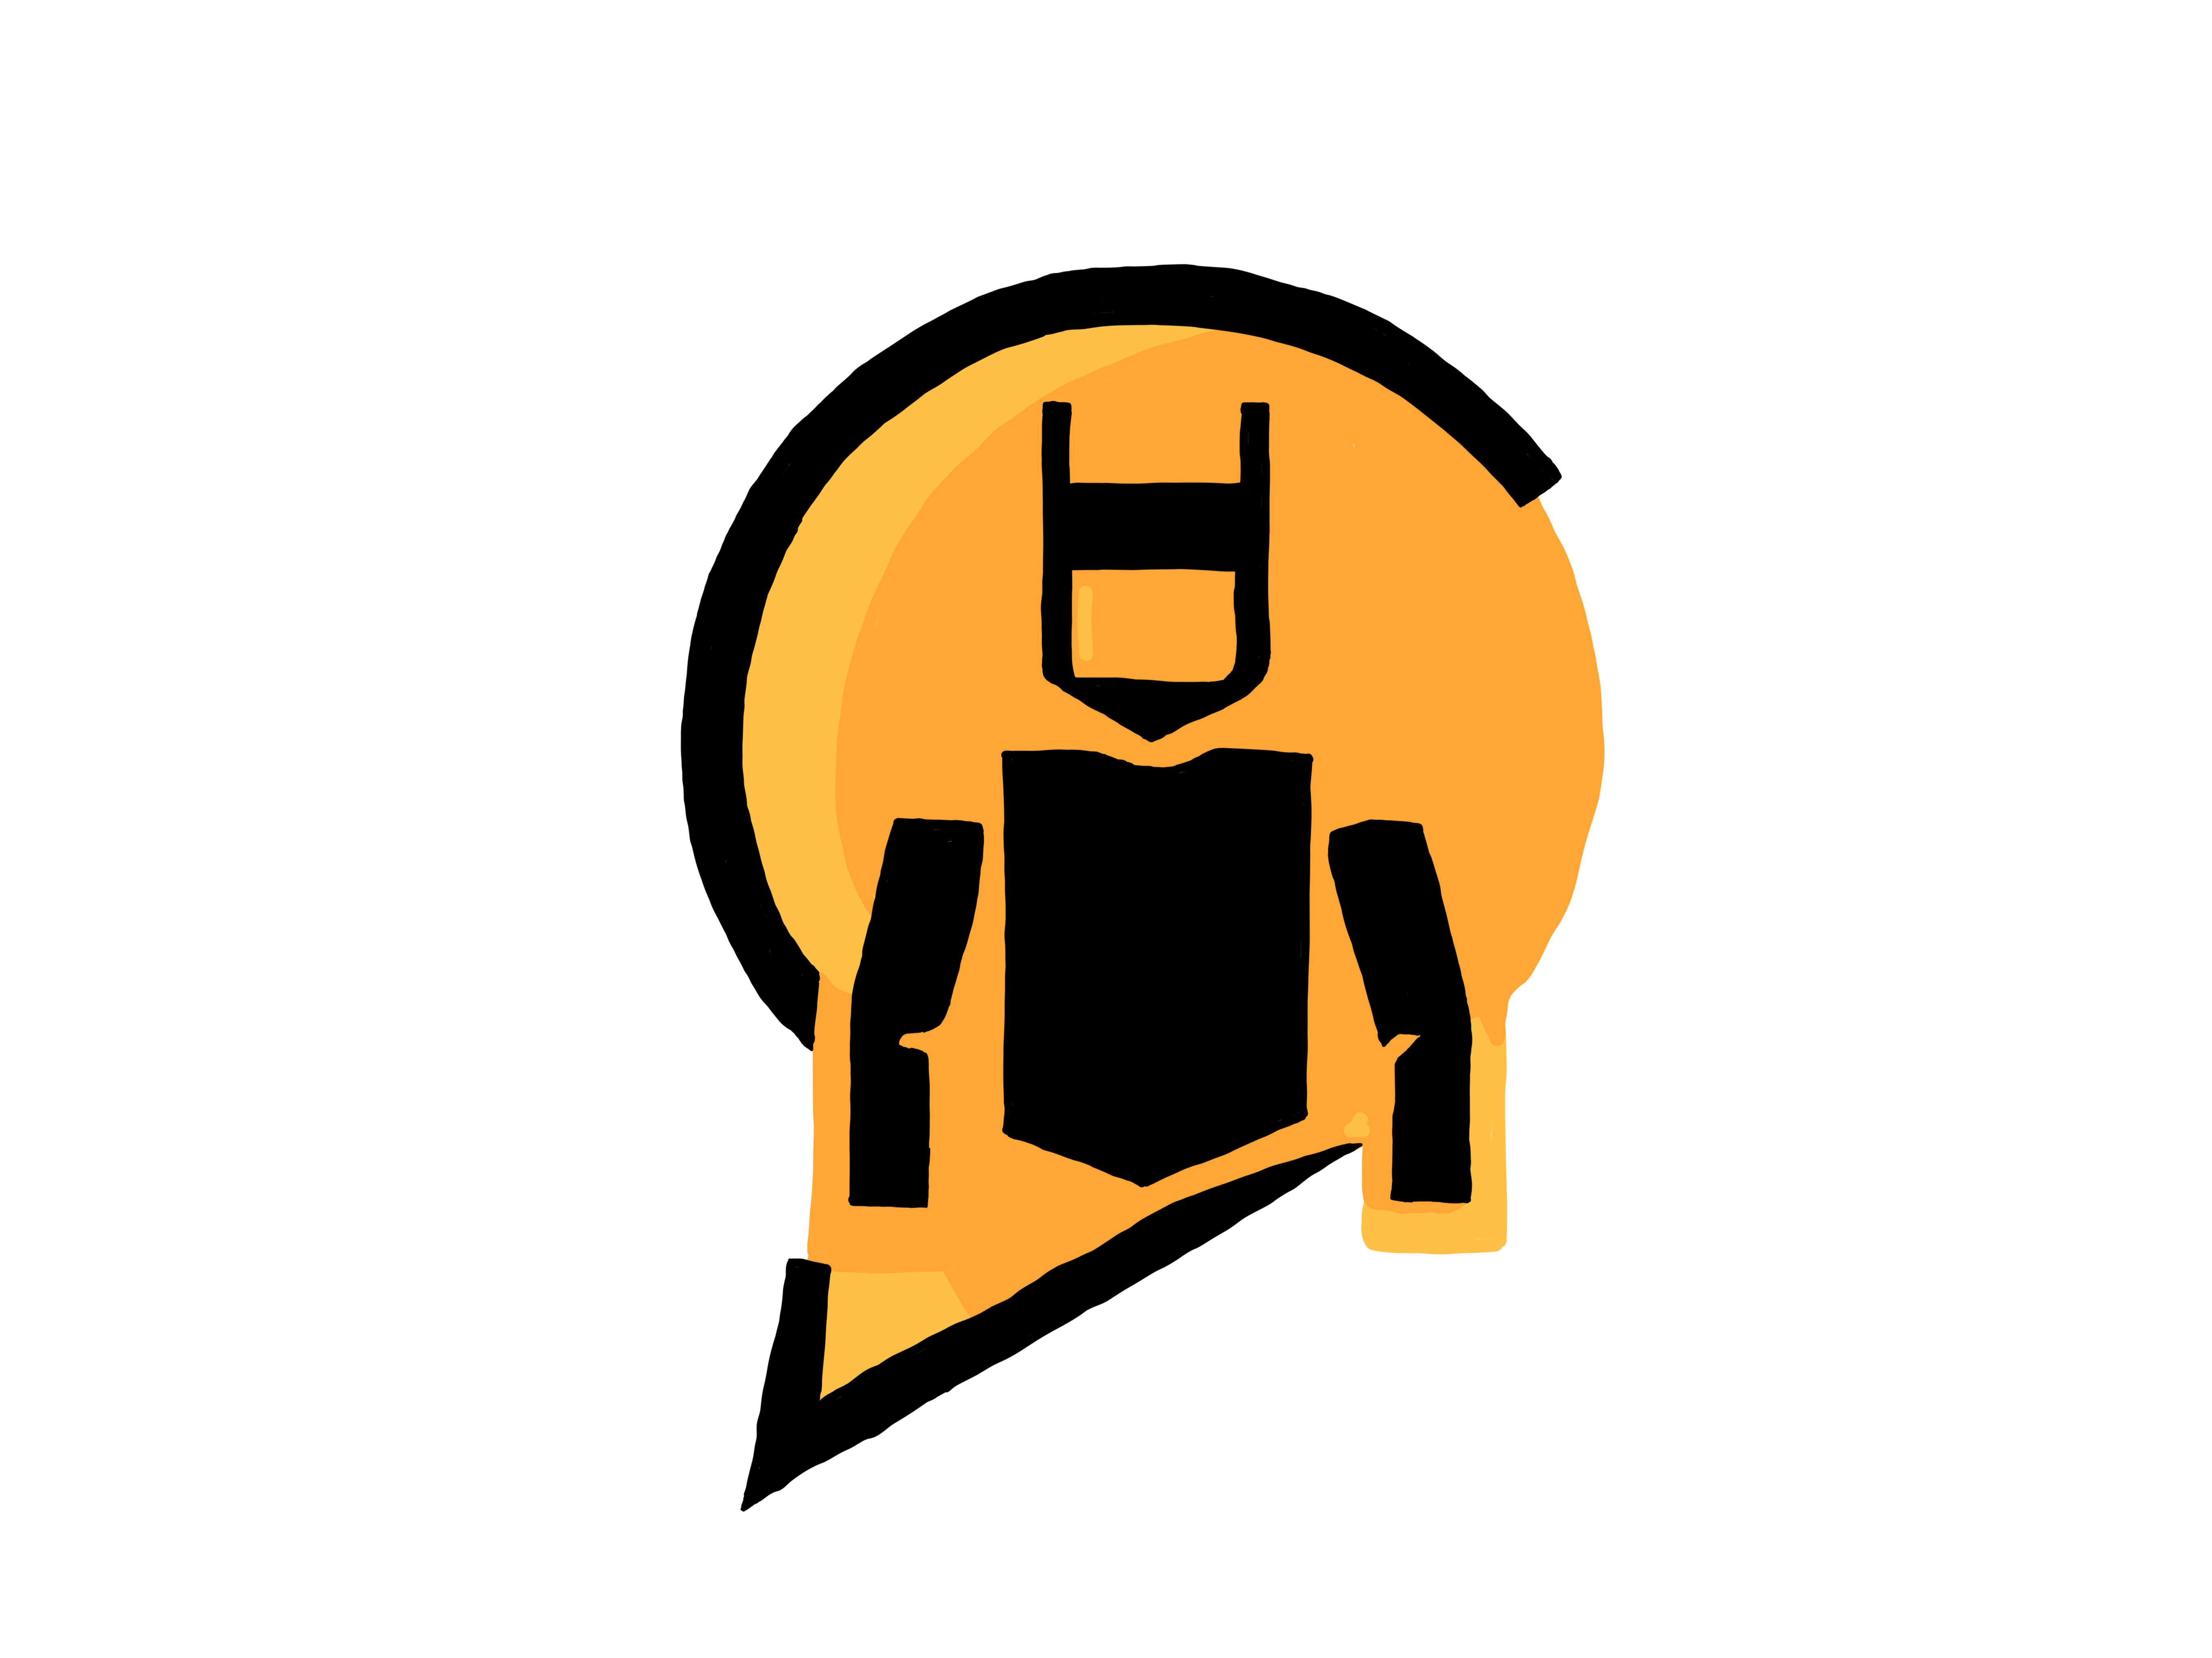 Tyl-bot logo 2